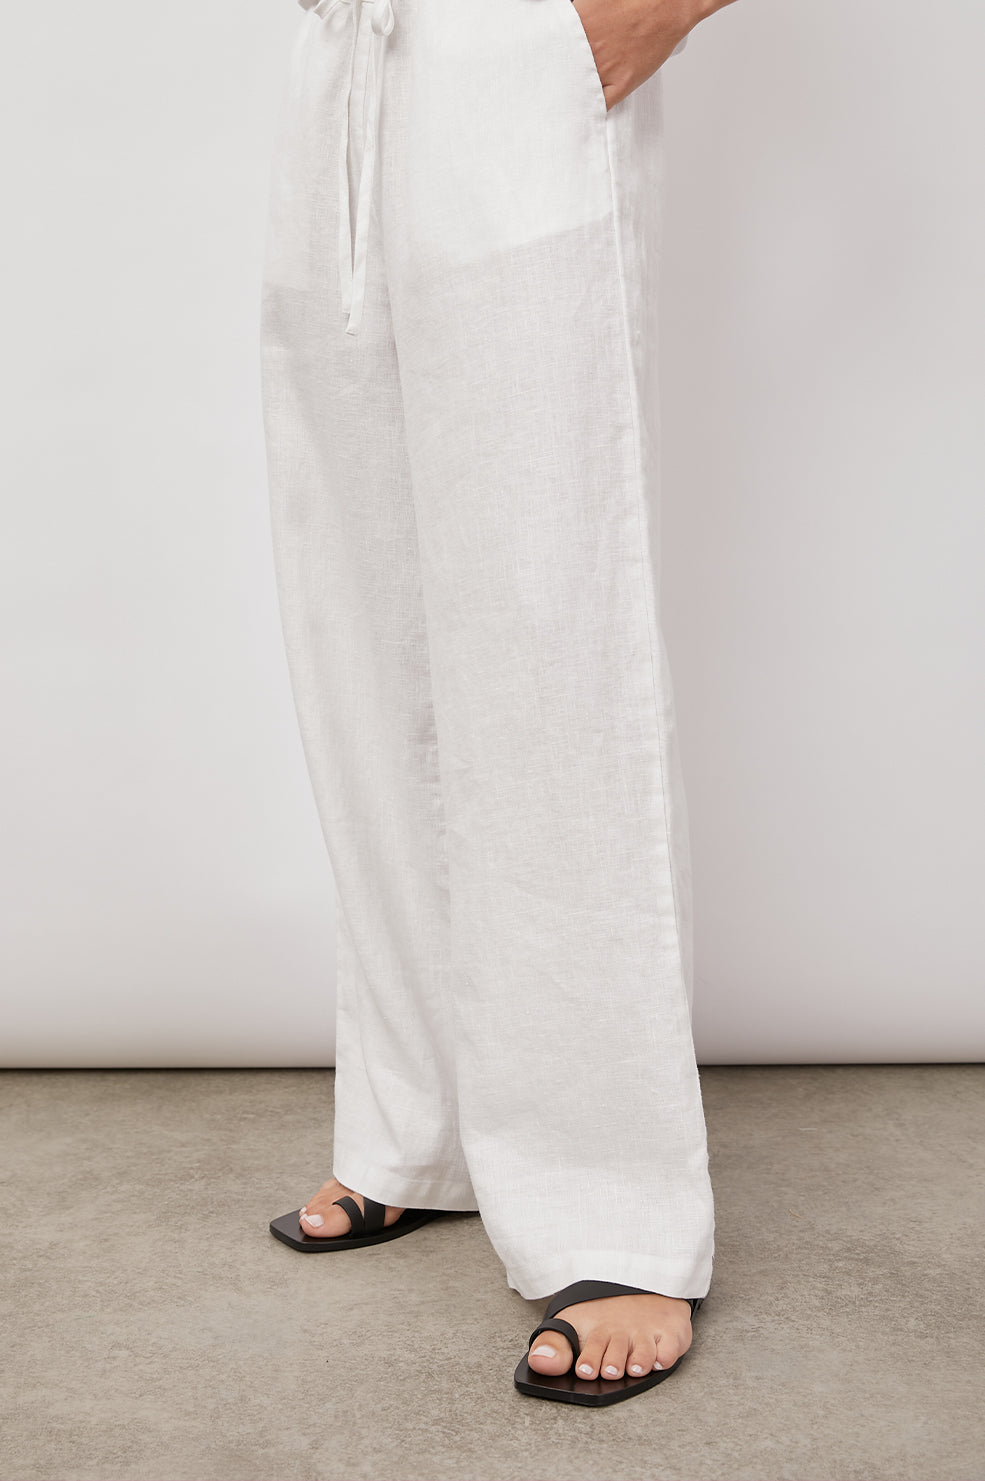 Amazon.co.uk: White Linen Trousers